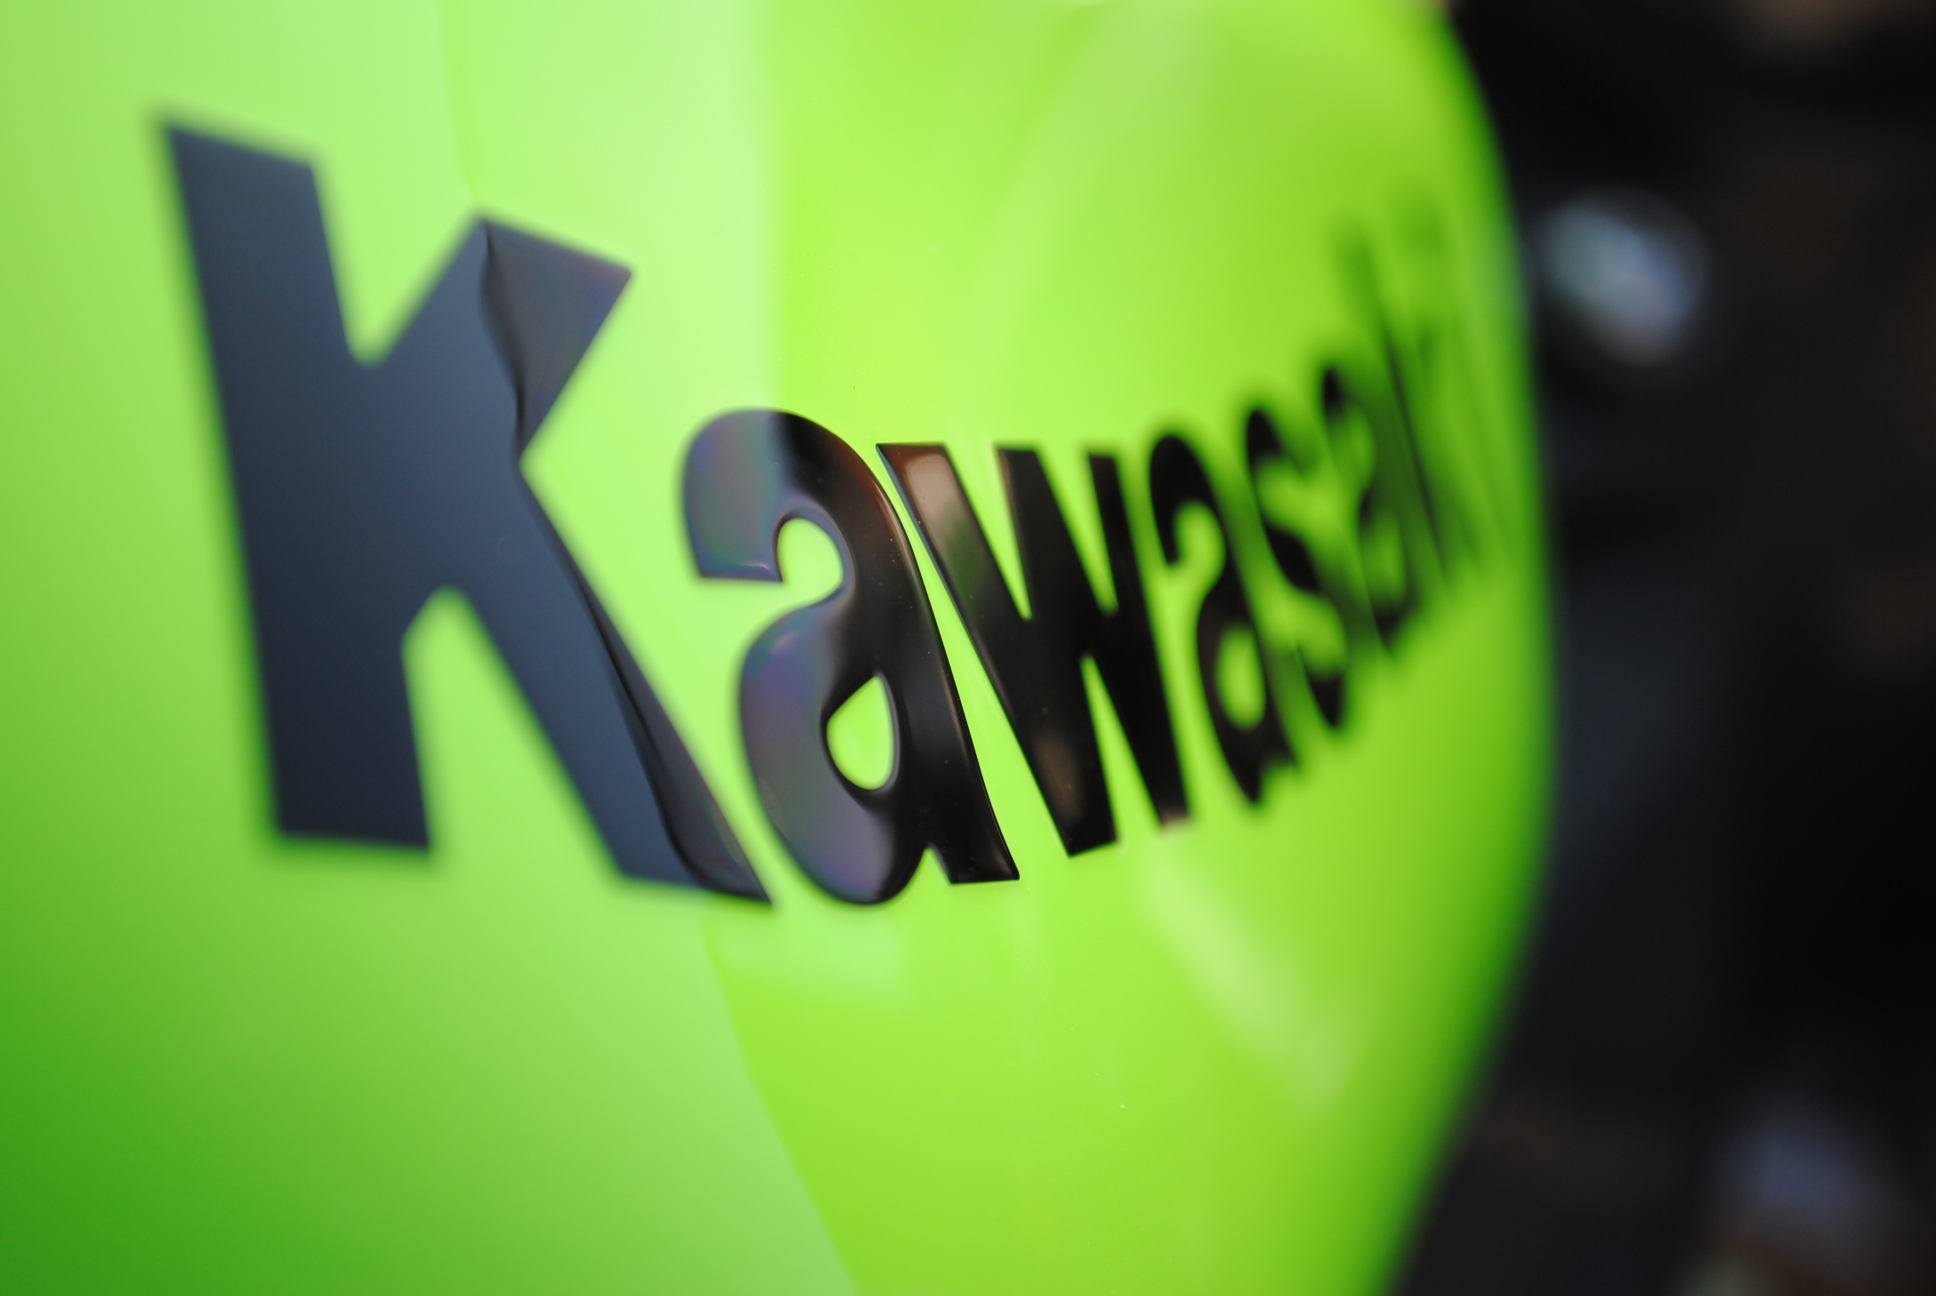 carta da parati logo kawasaki,verde,giallo,font,grafica,fotografia